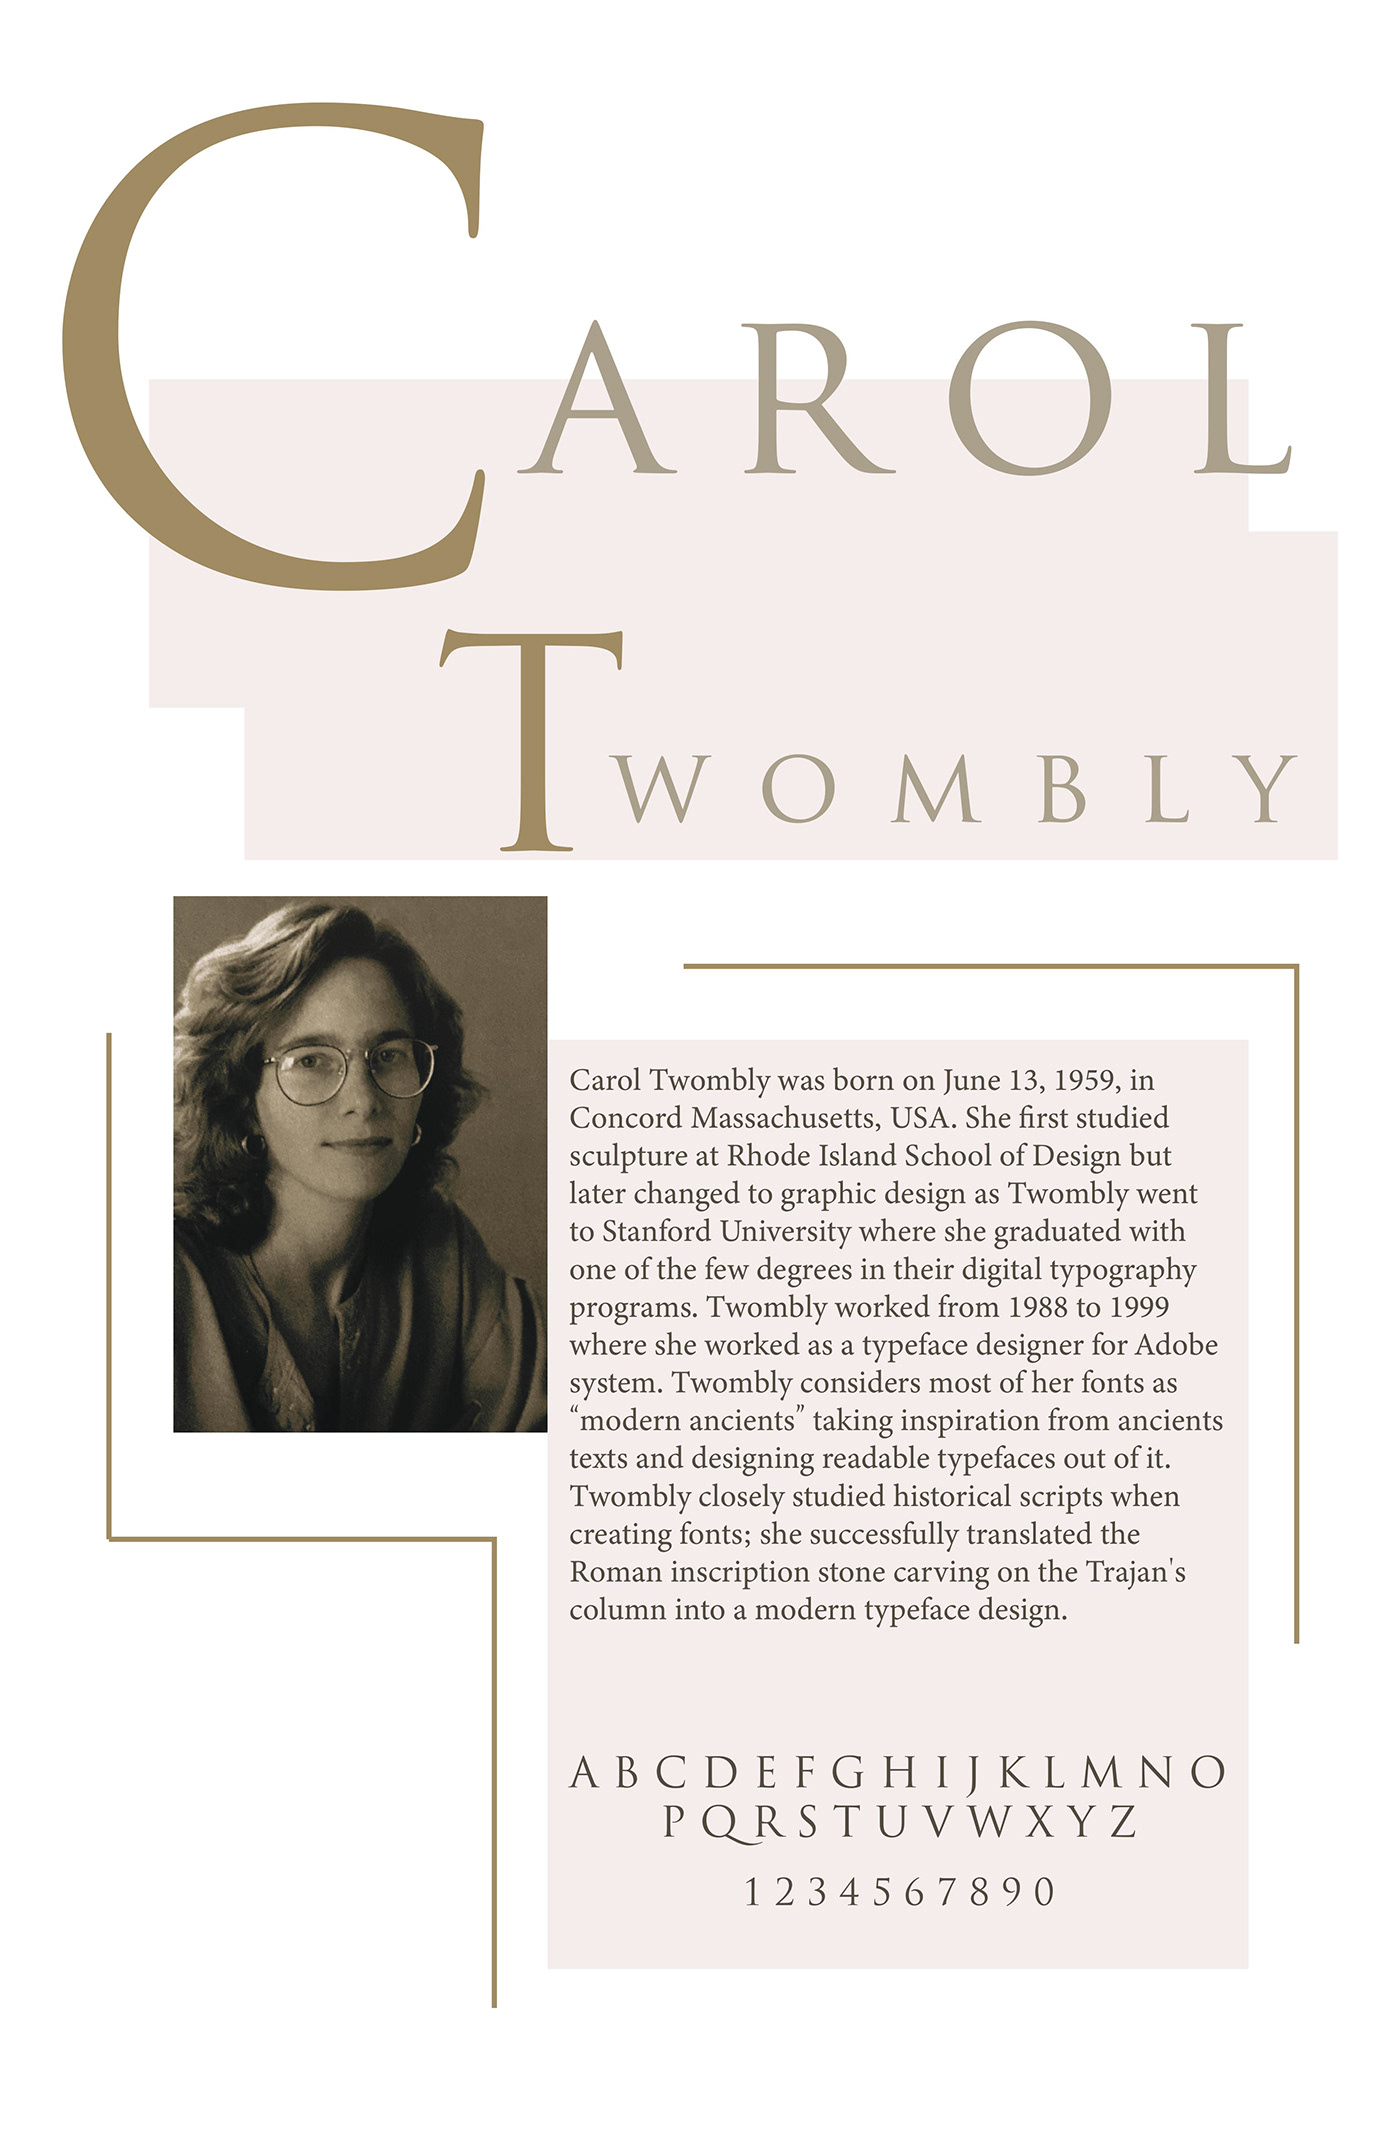 Carol Twombly biography font history trajan trajan pro design